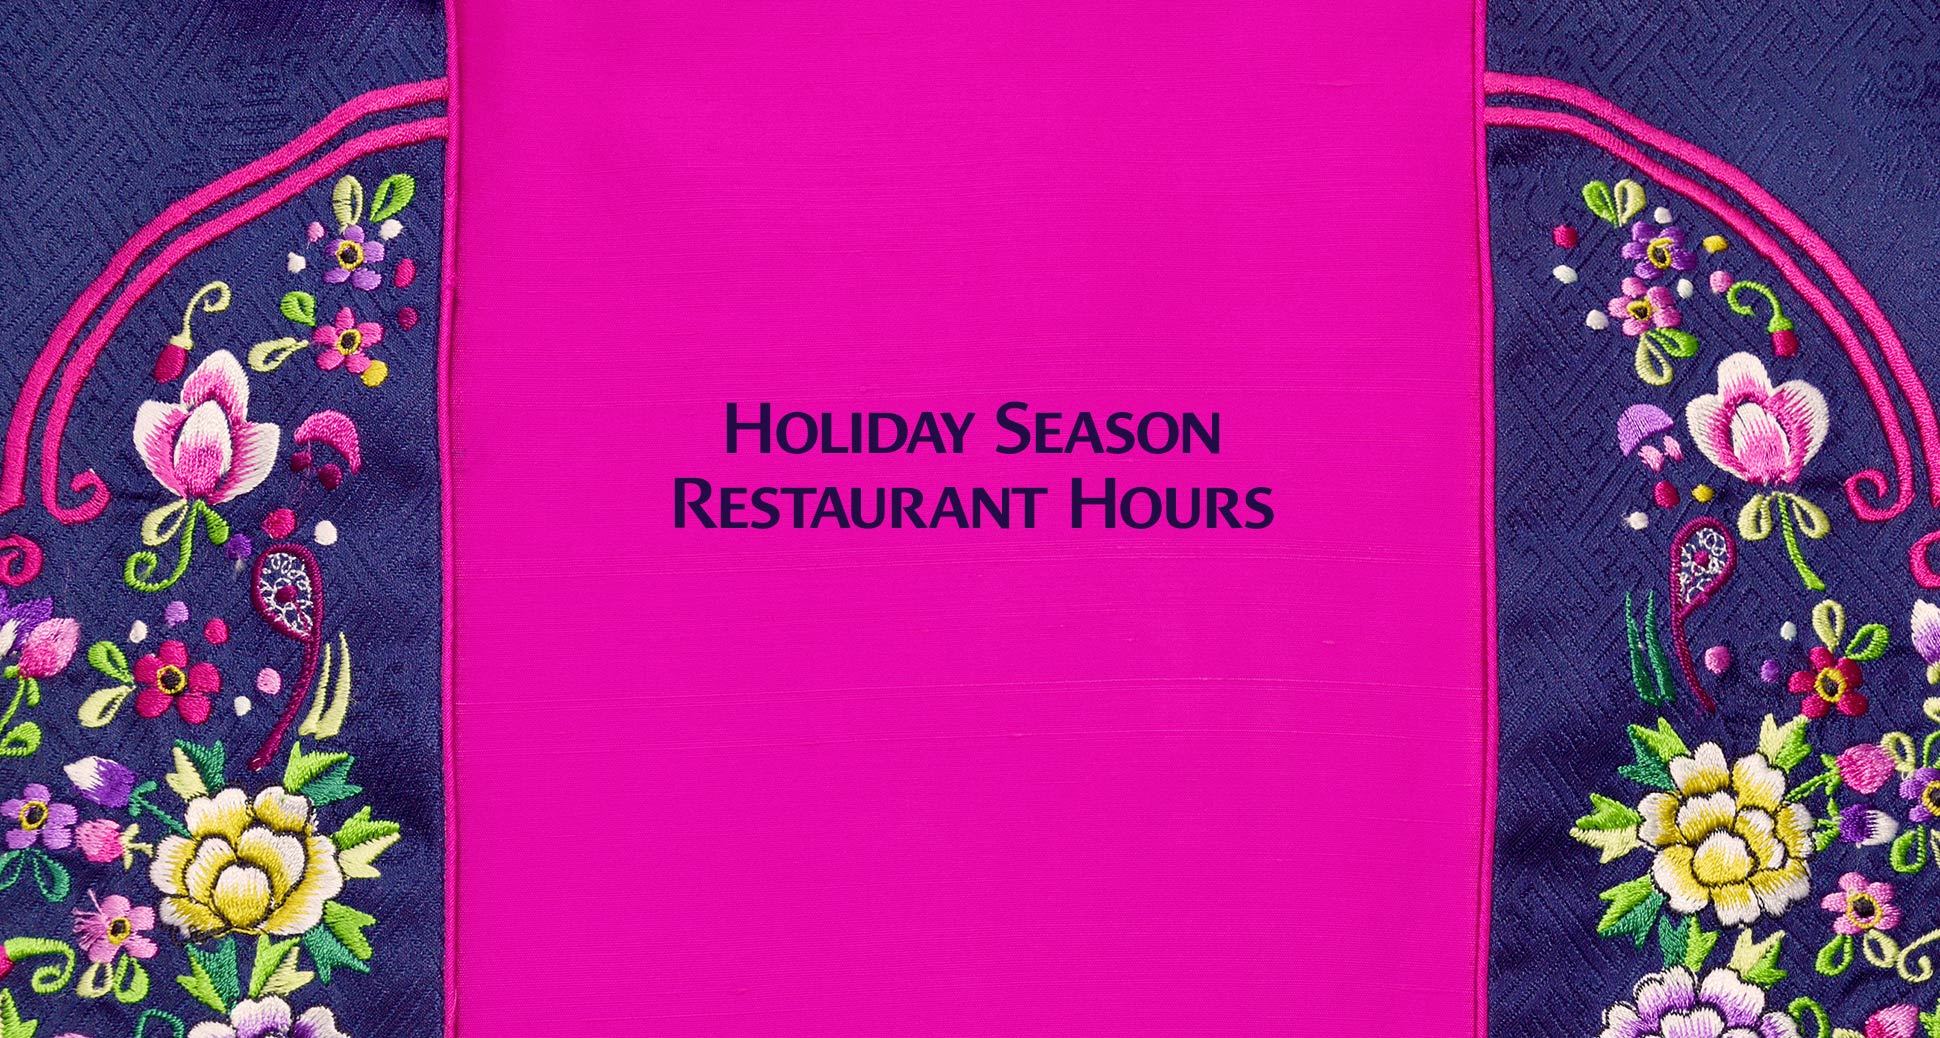 Holiday season restaurant hours